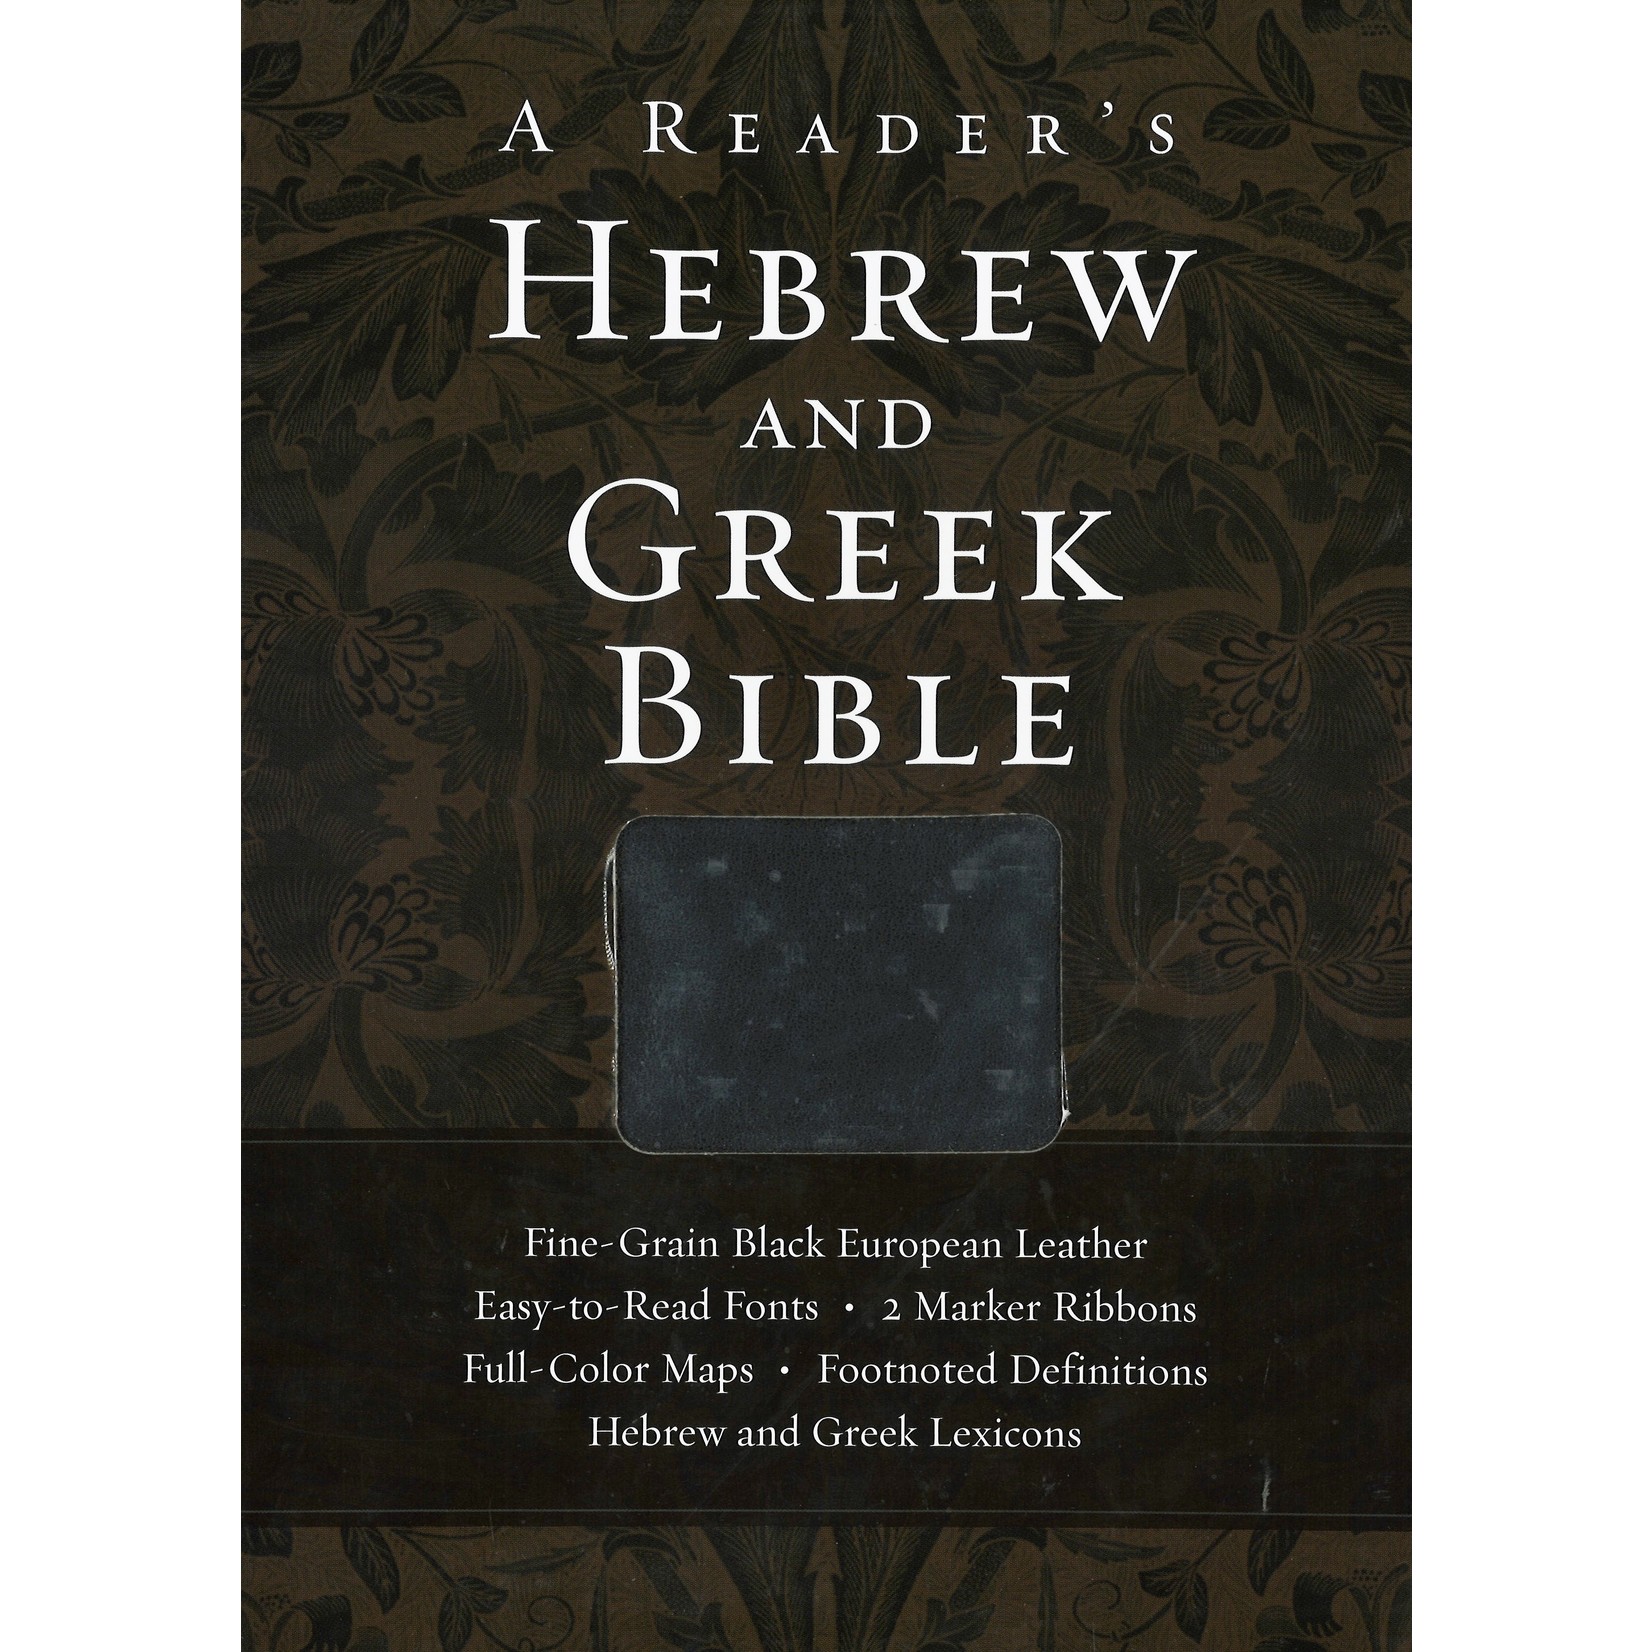 READER’S HEBREW AND GREEK BIBLE